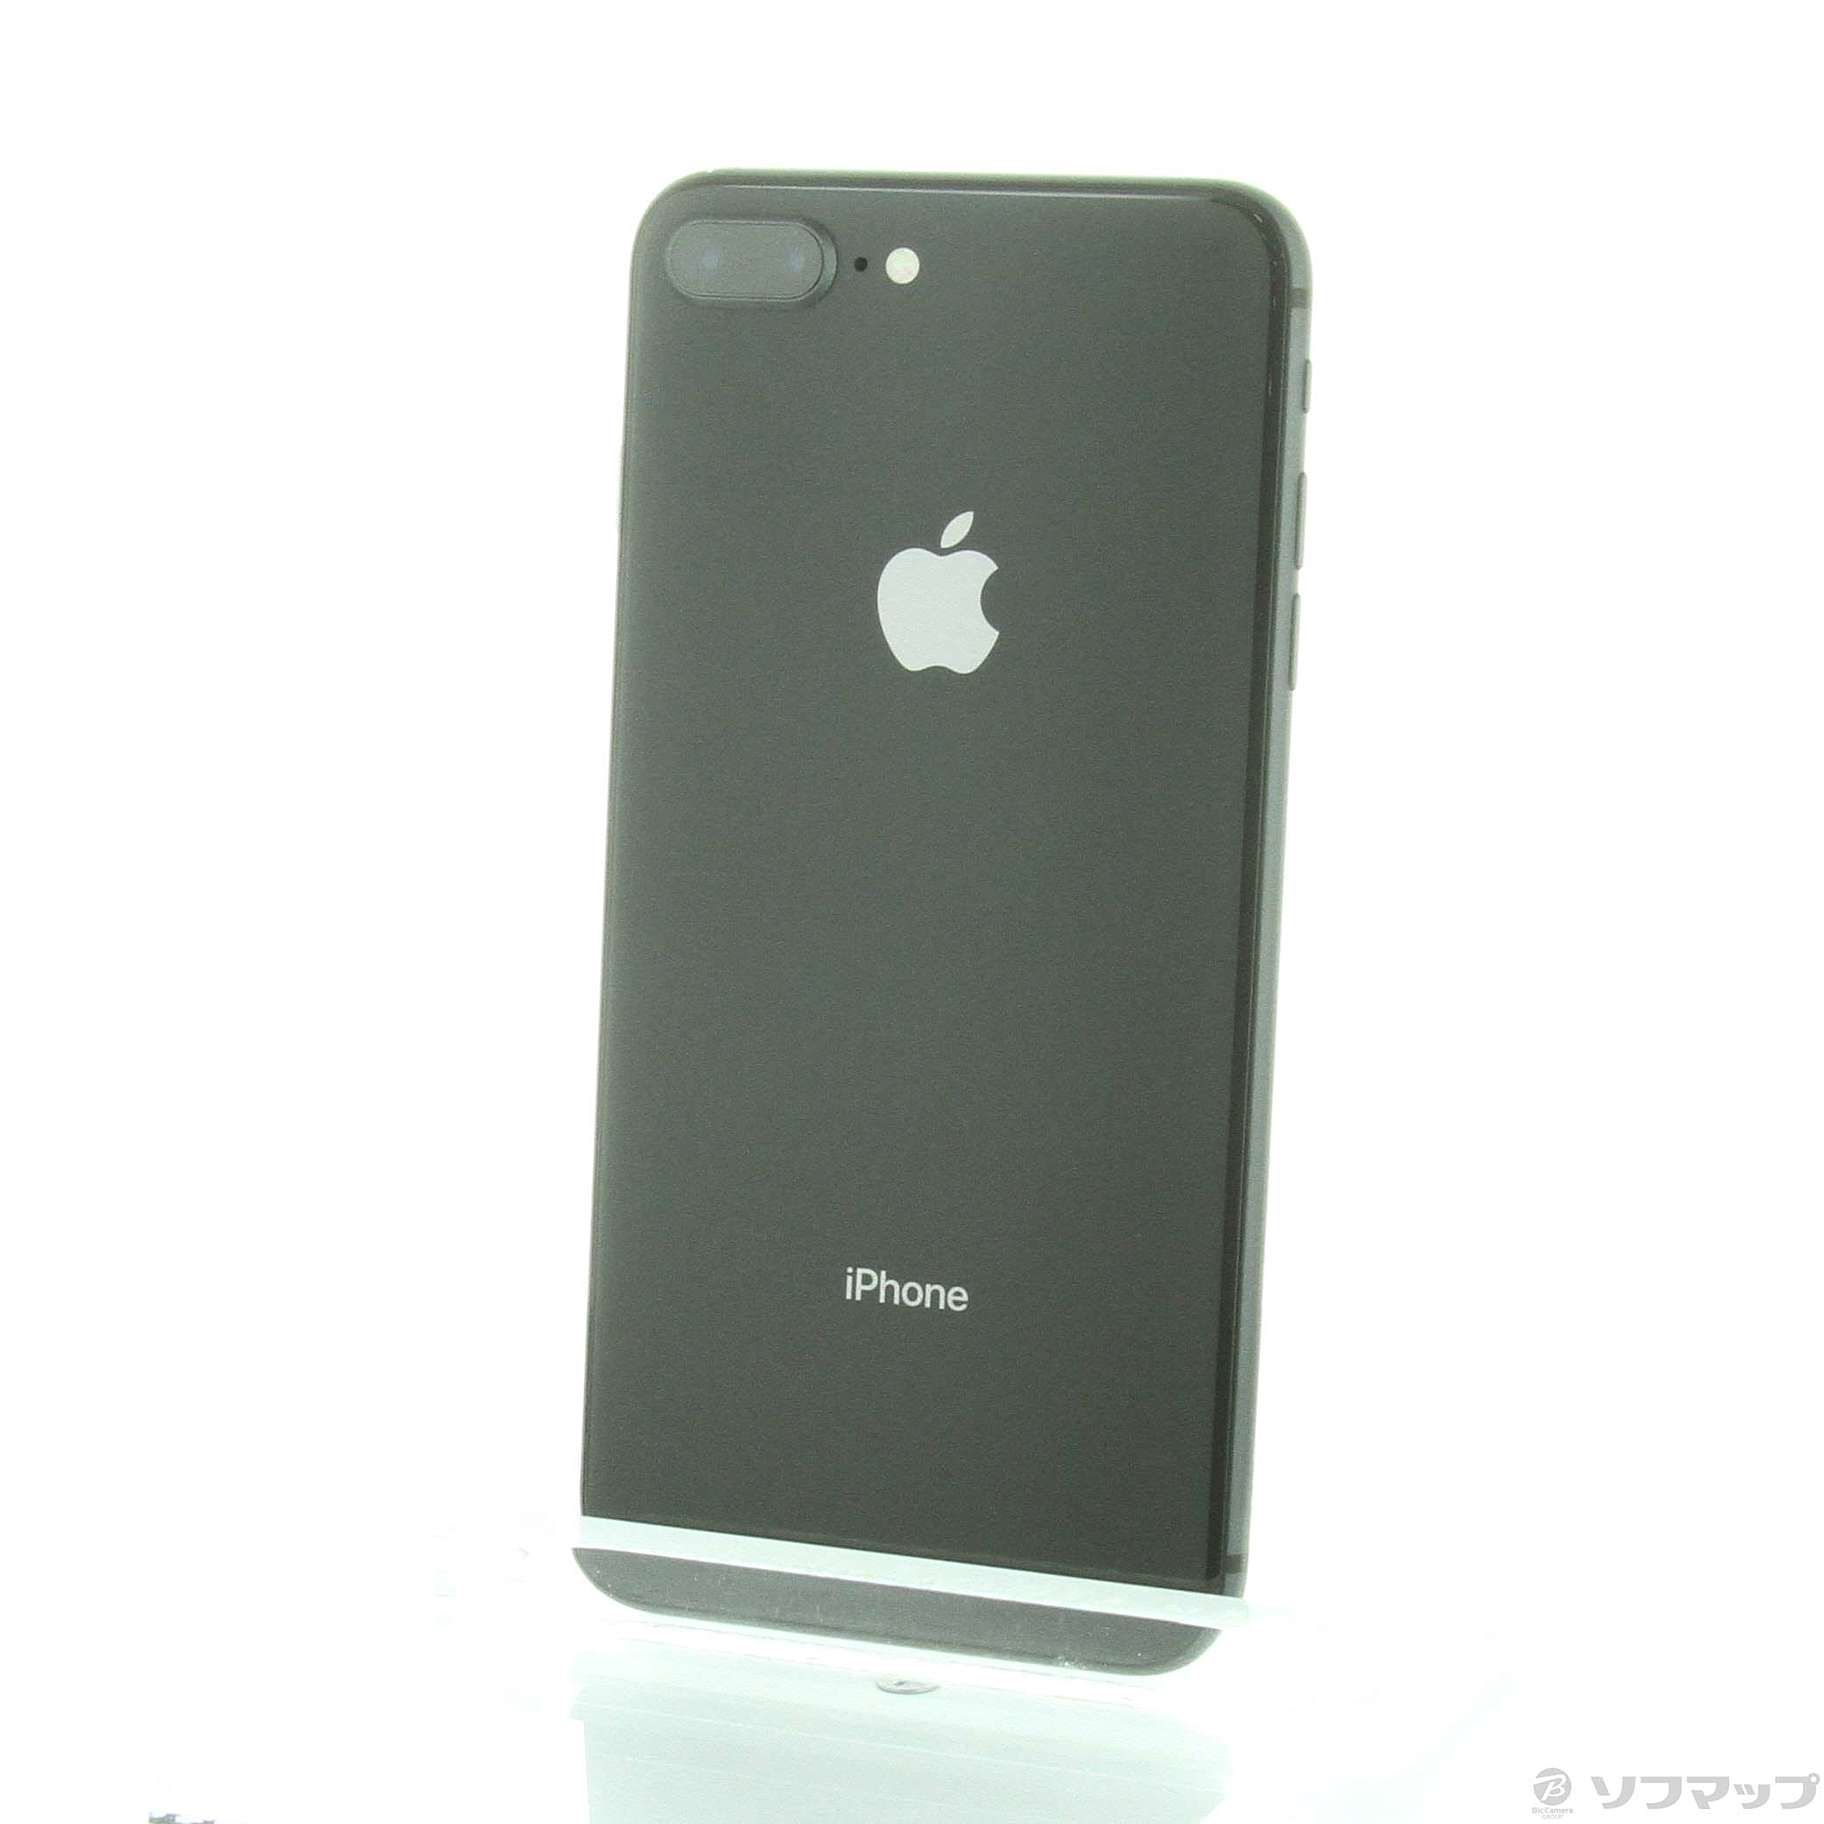 iPhone8 plus 64GB Space Gray SIMフリー